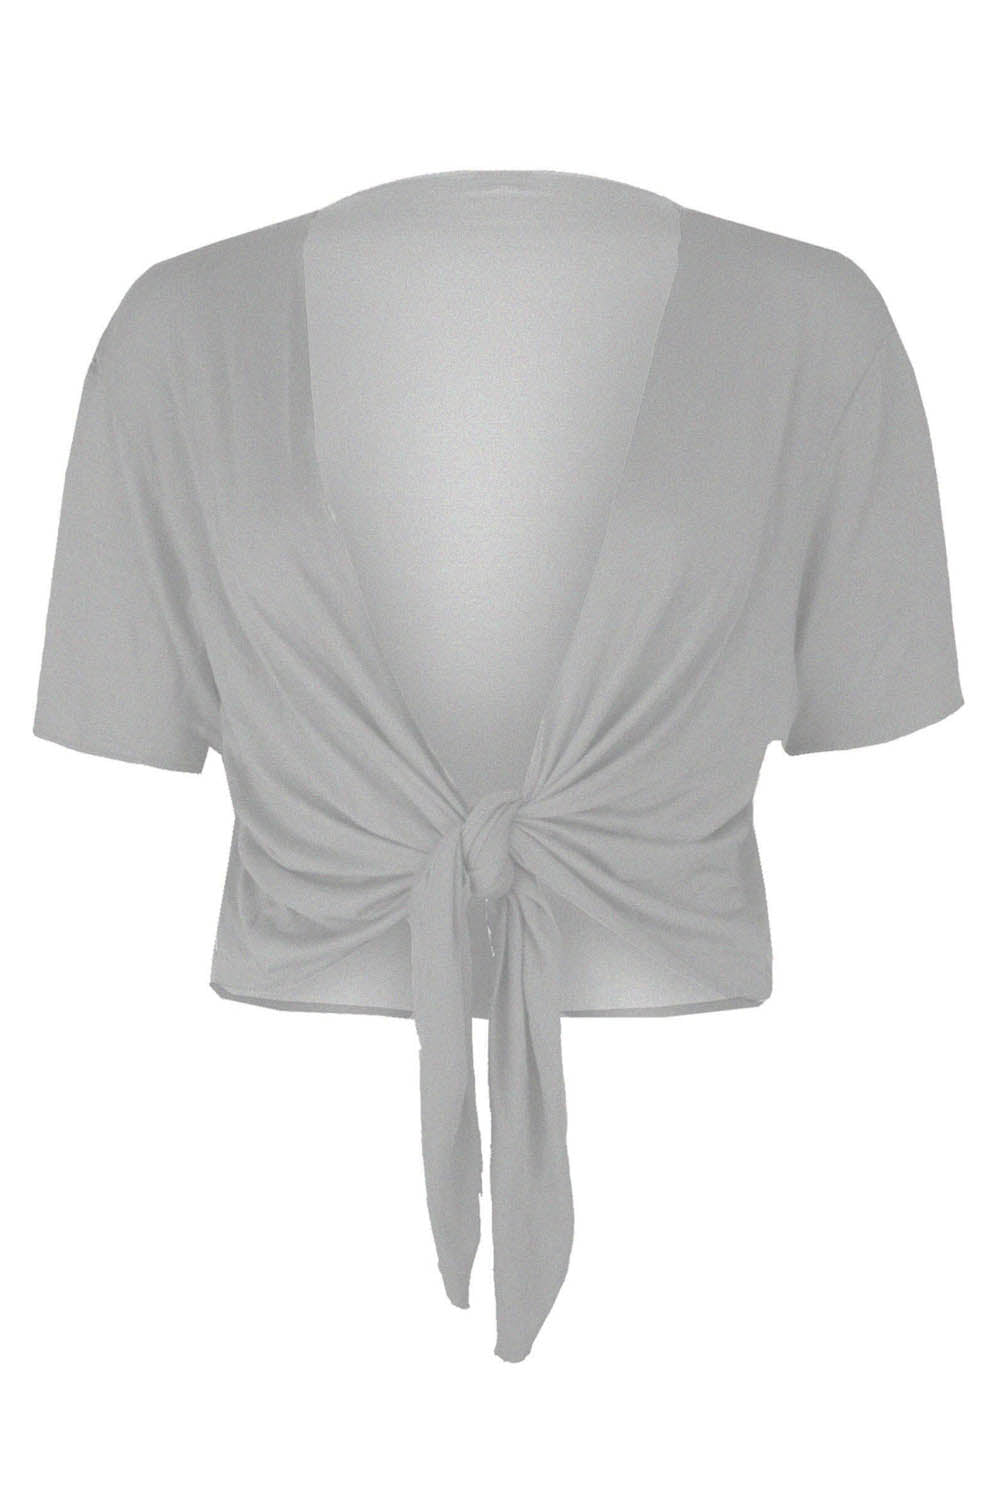 Tie Front Basic Jersey Short Sleeve Shrug - bejealous-com